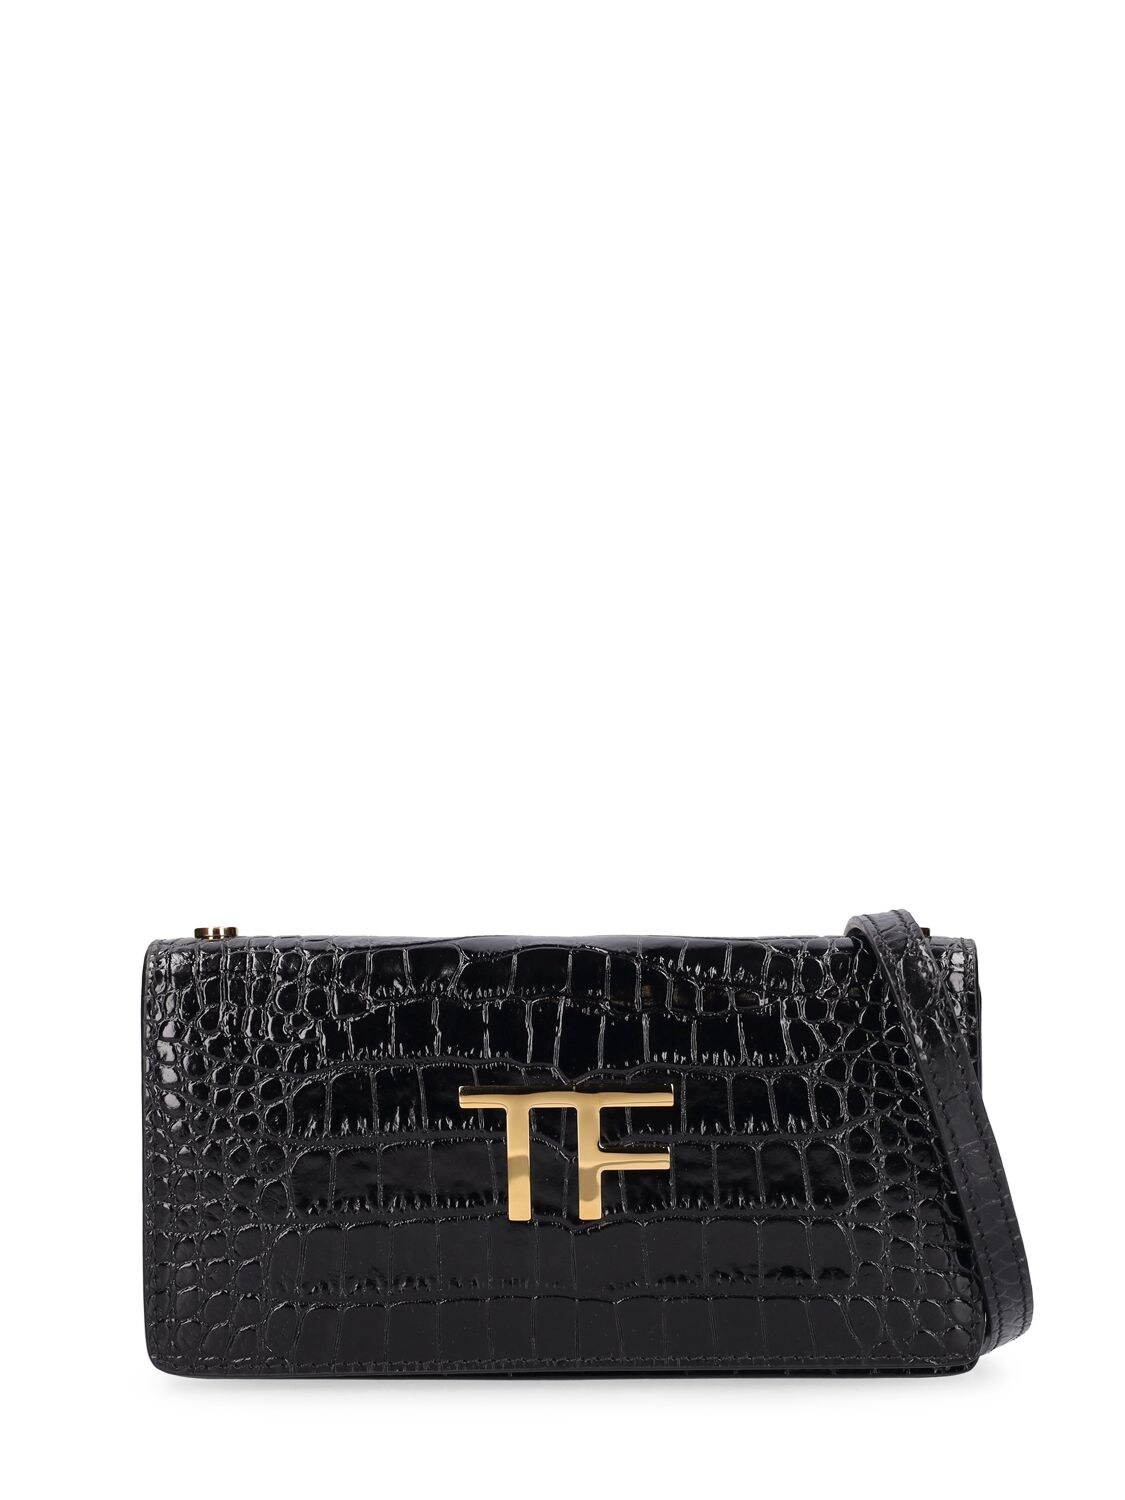 Tom Ford Mini Tf Croc Effect Leather Bag In Black